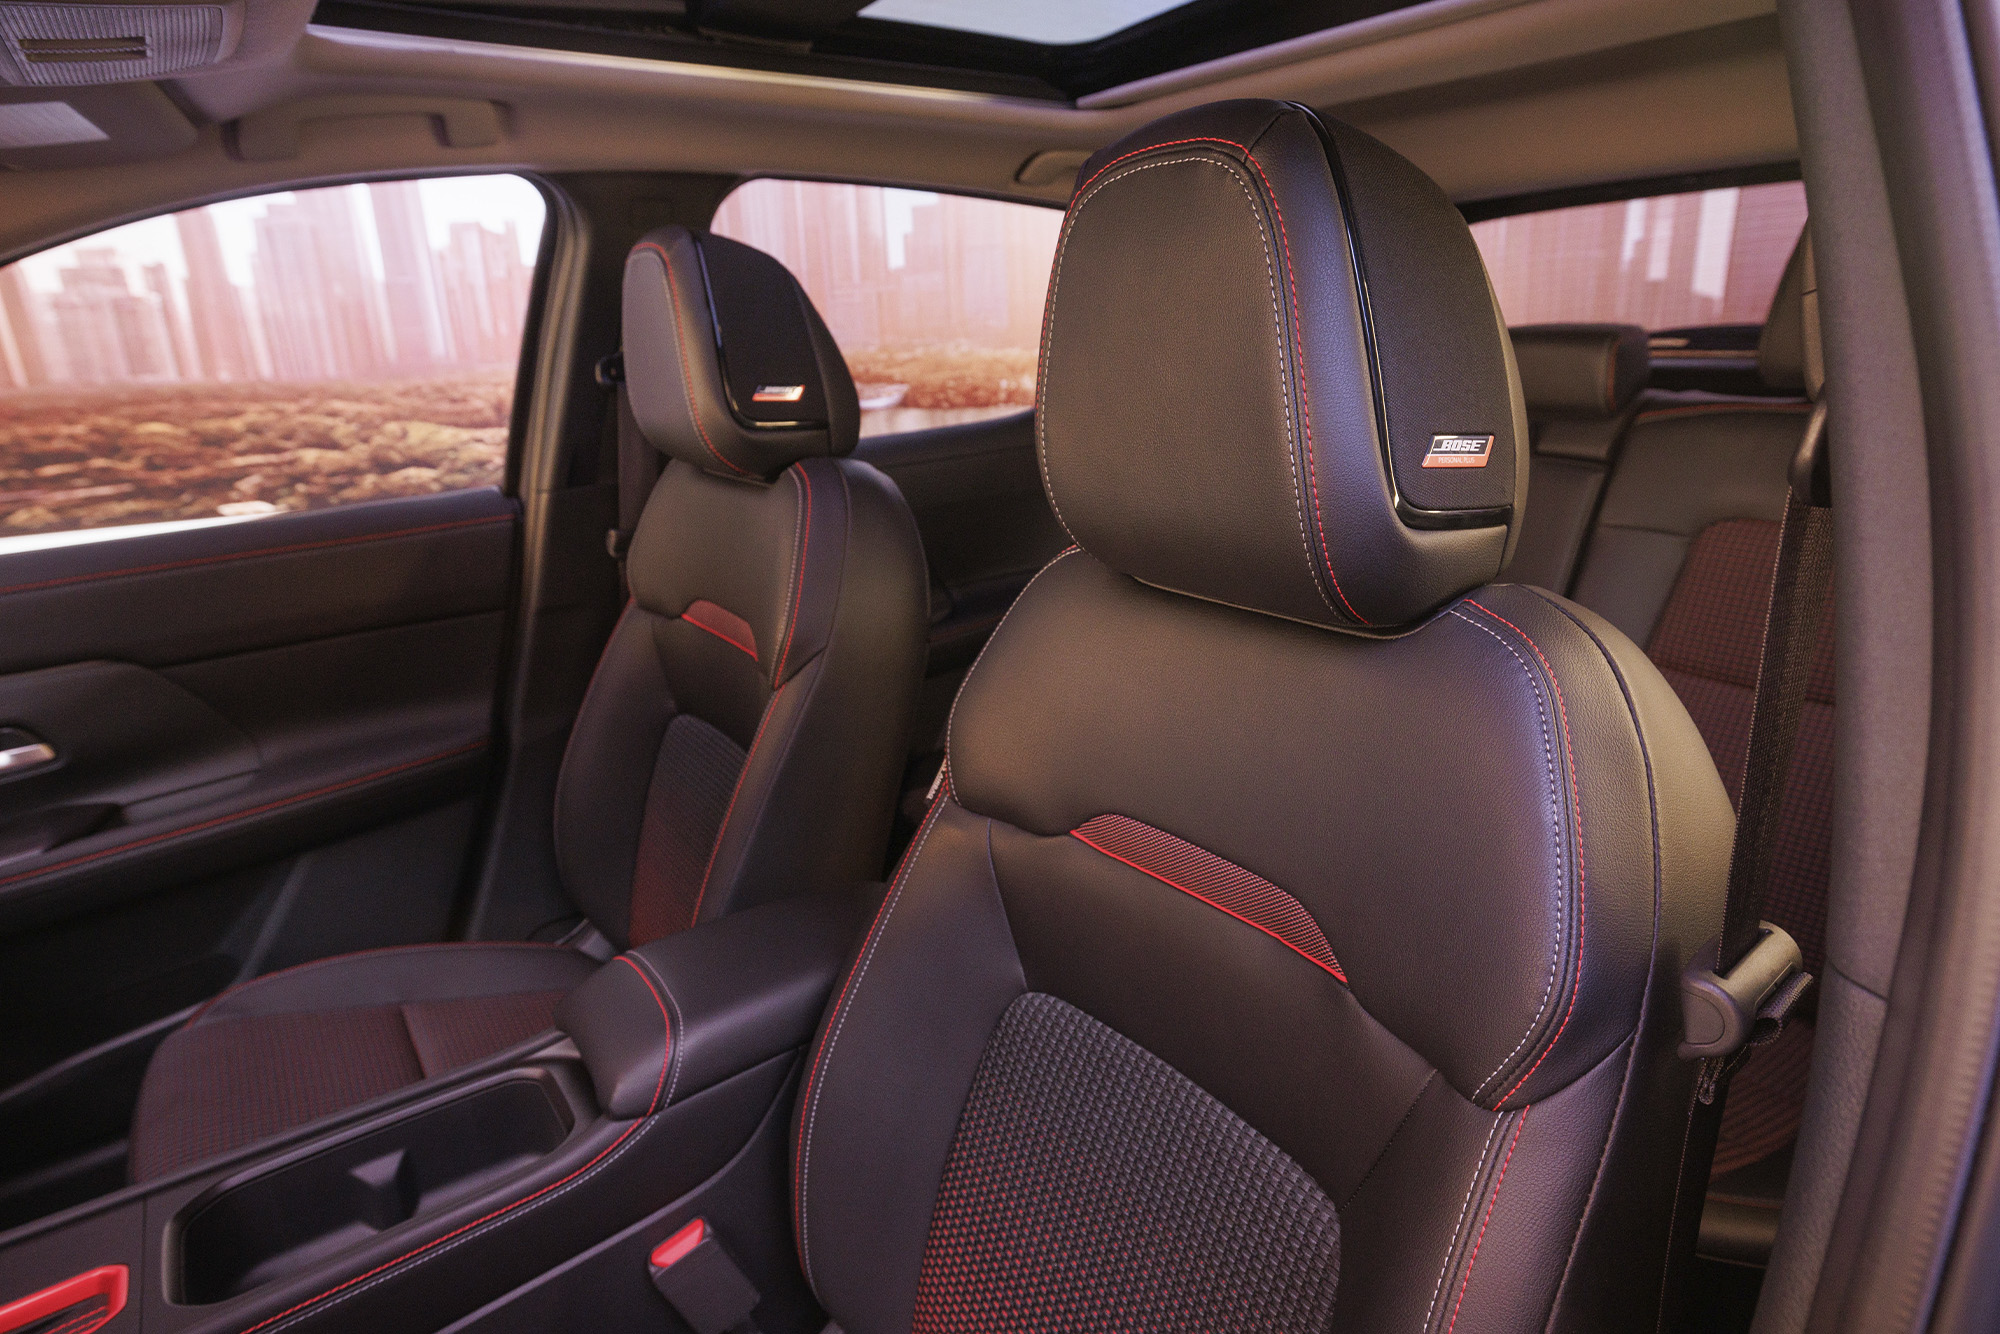 The All-New 2025 Nissan KICKS passenger seat